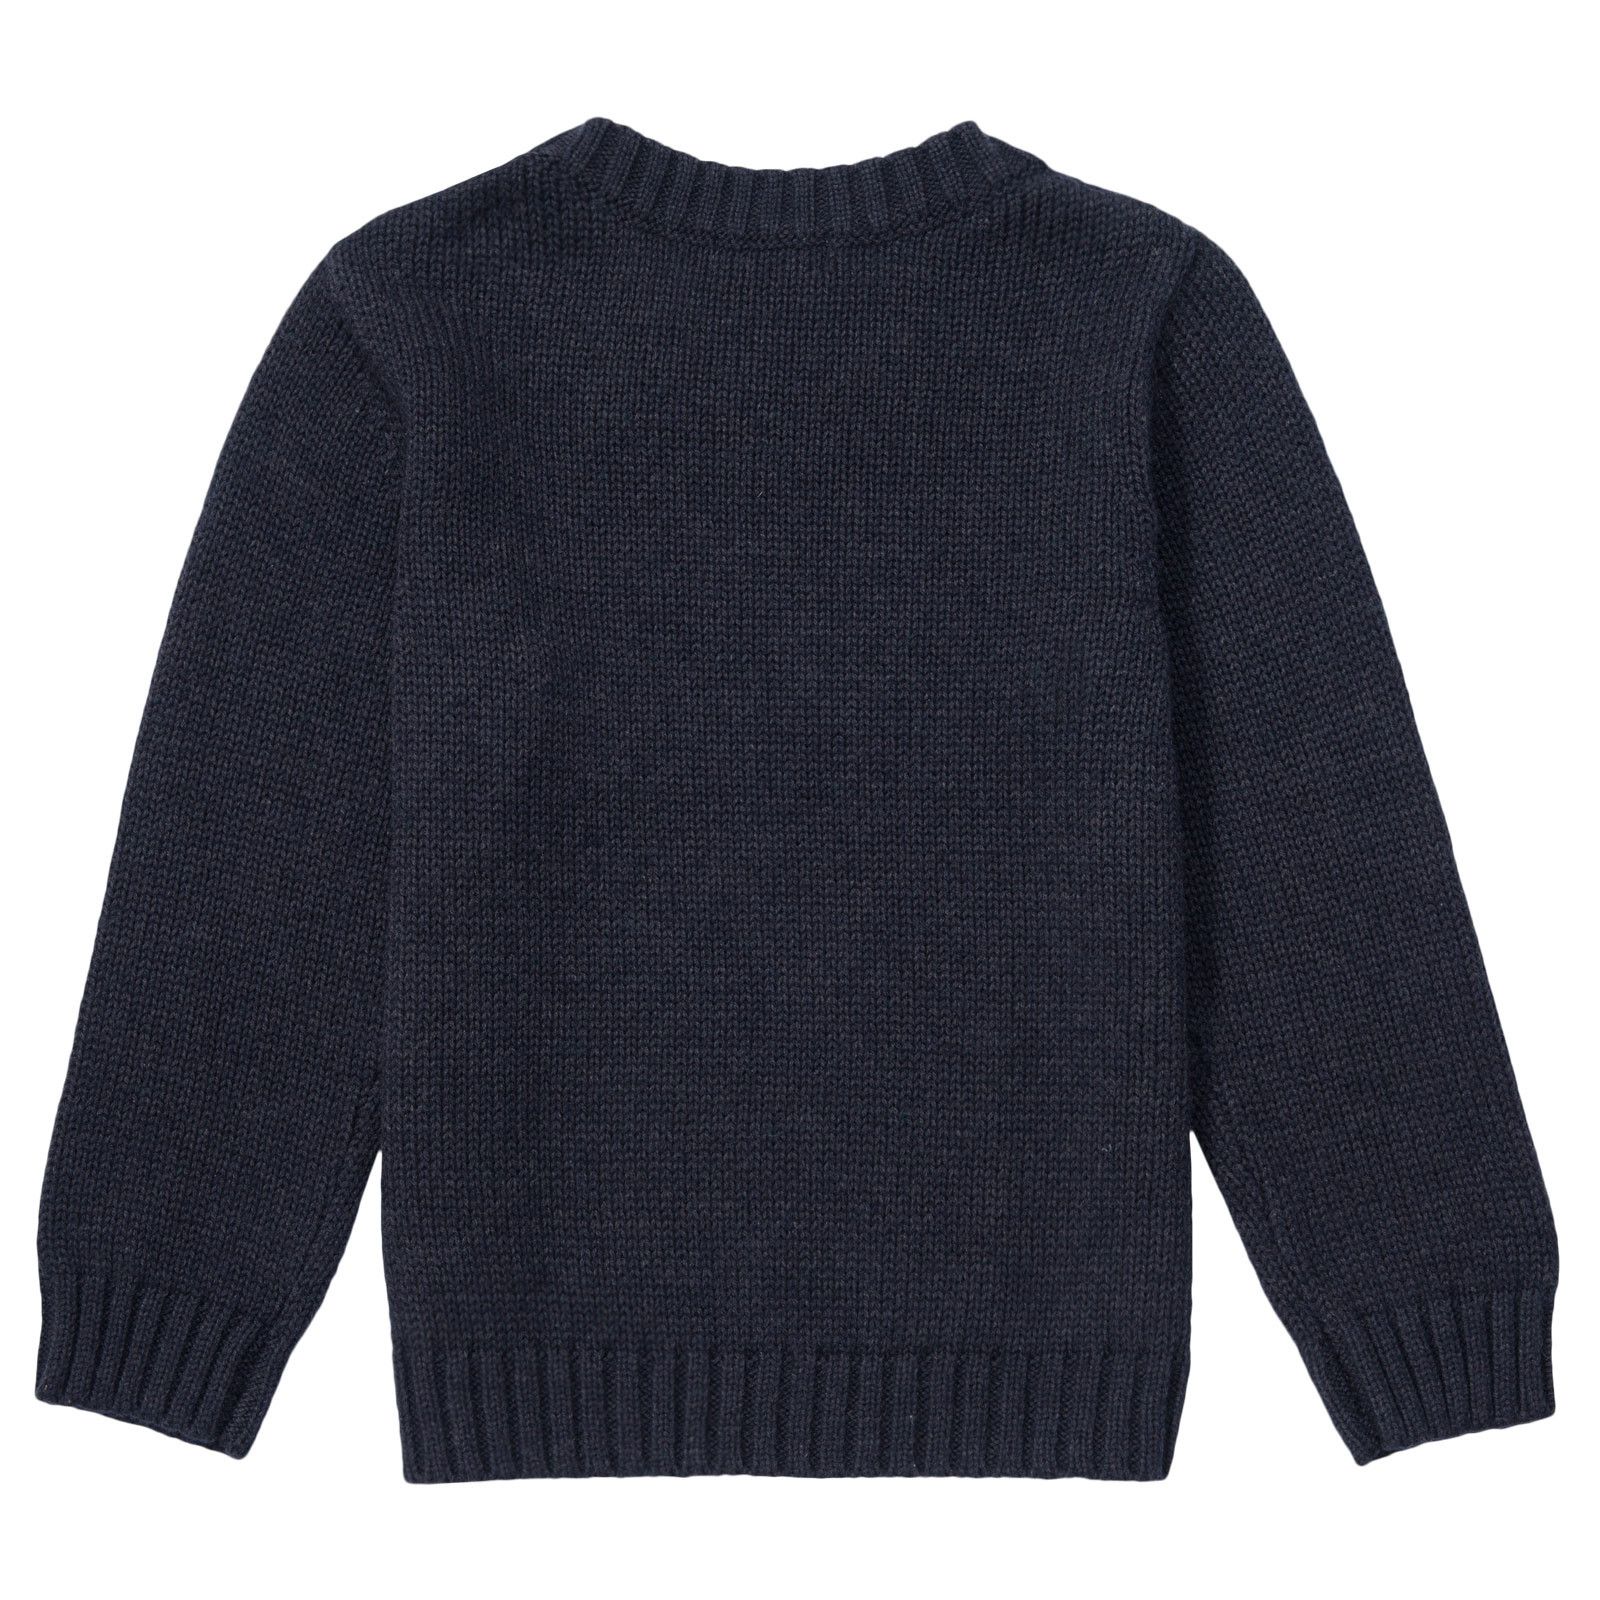 Boys Dark Grey Embroidered Monster Sweater - CÉMAROSE | Children's Fashion Store - 2